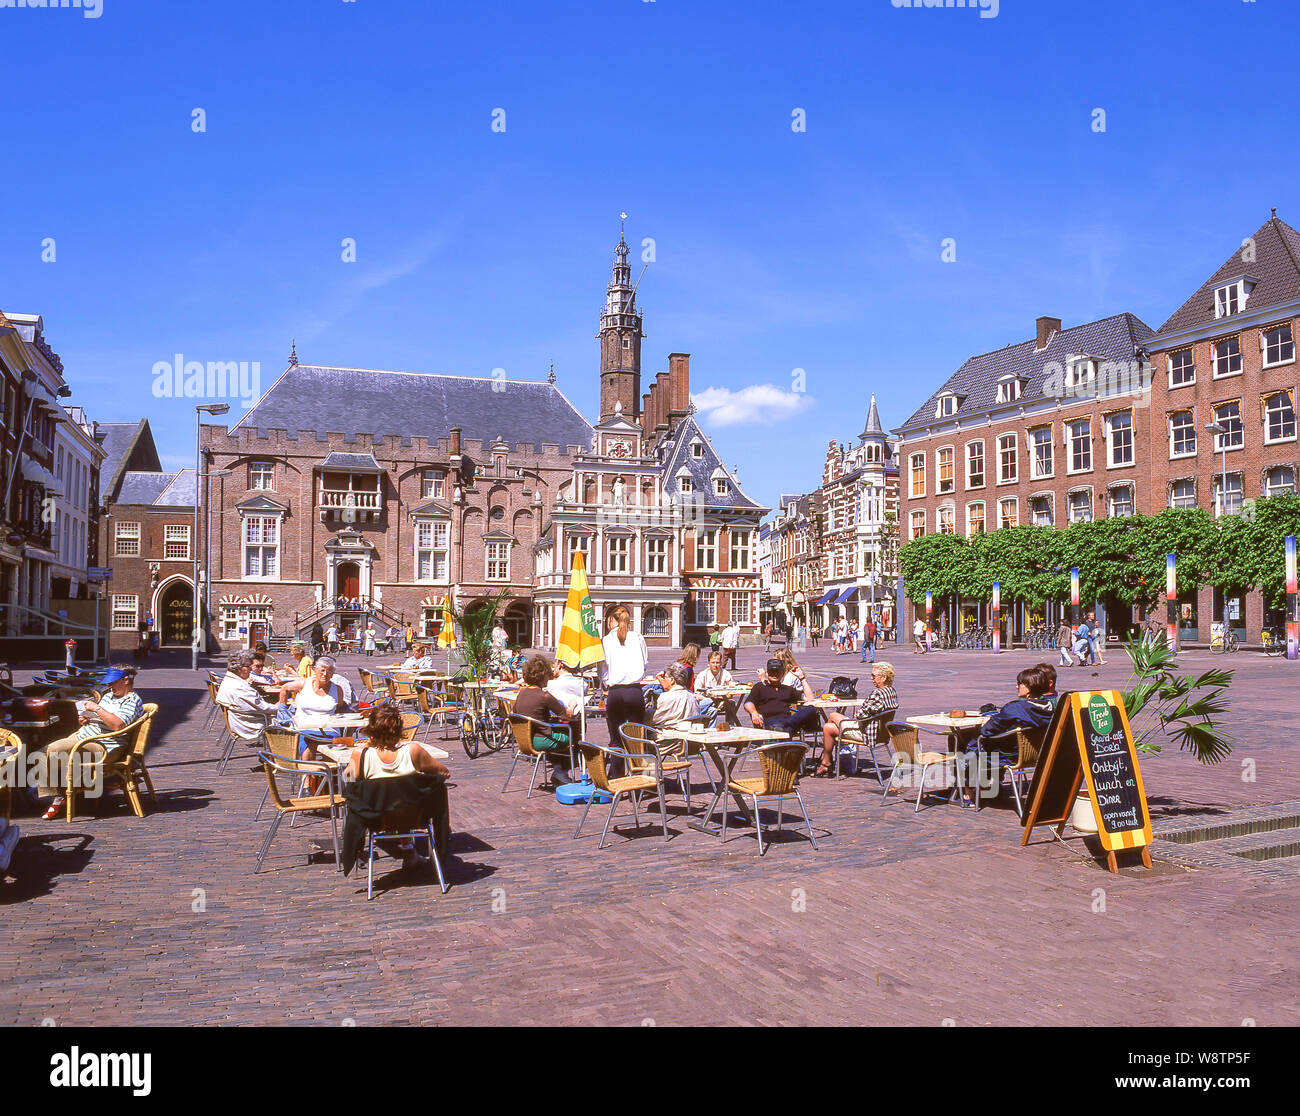 Café en plein air, Grote Markt, Haarlem, Pays-Bas (Amsterdam), royaume des Pays-Bas Banque D'Images